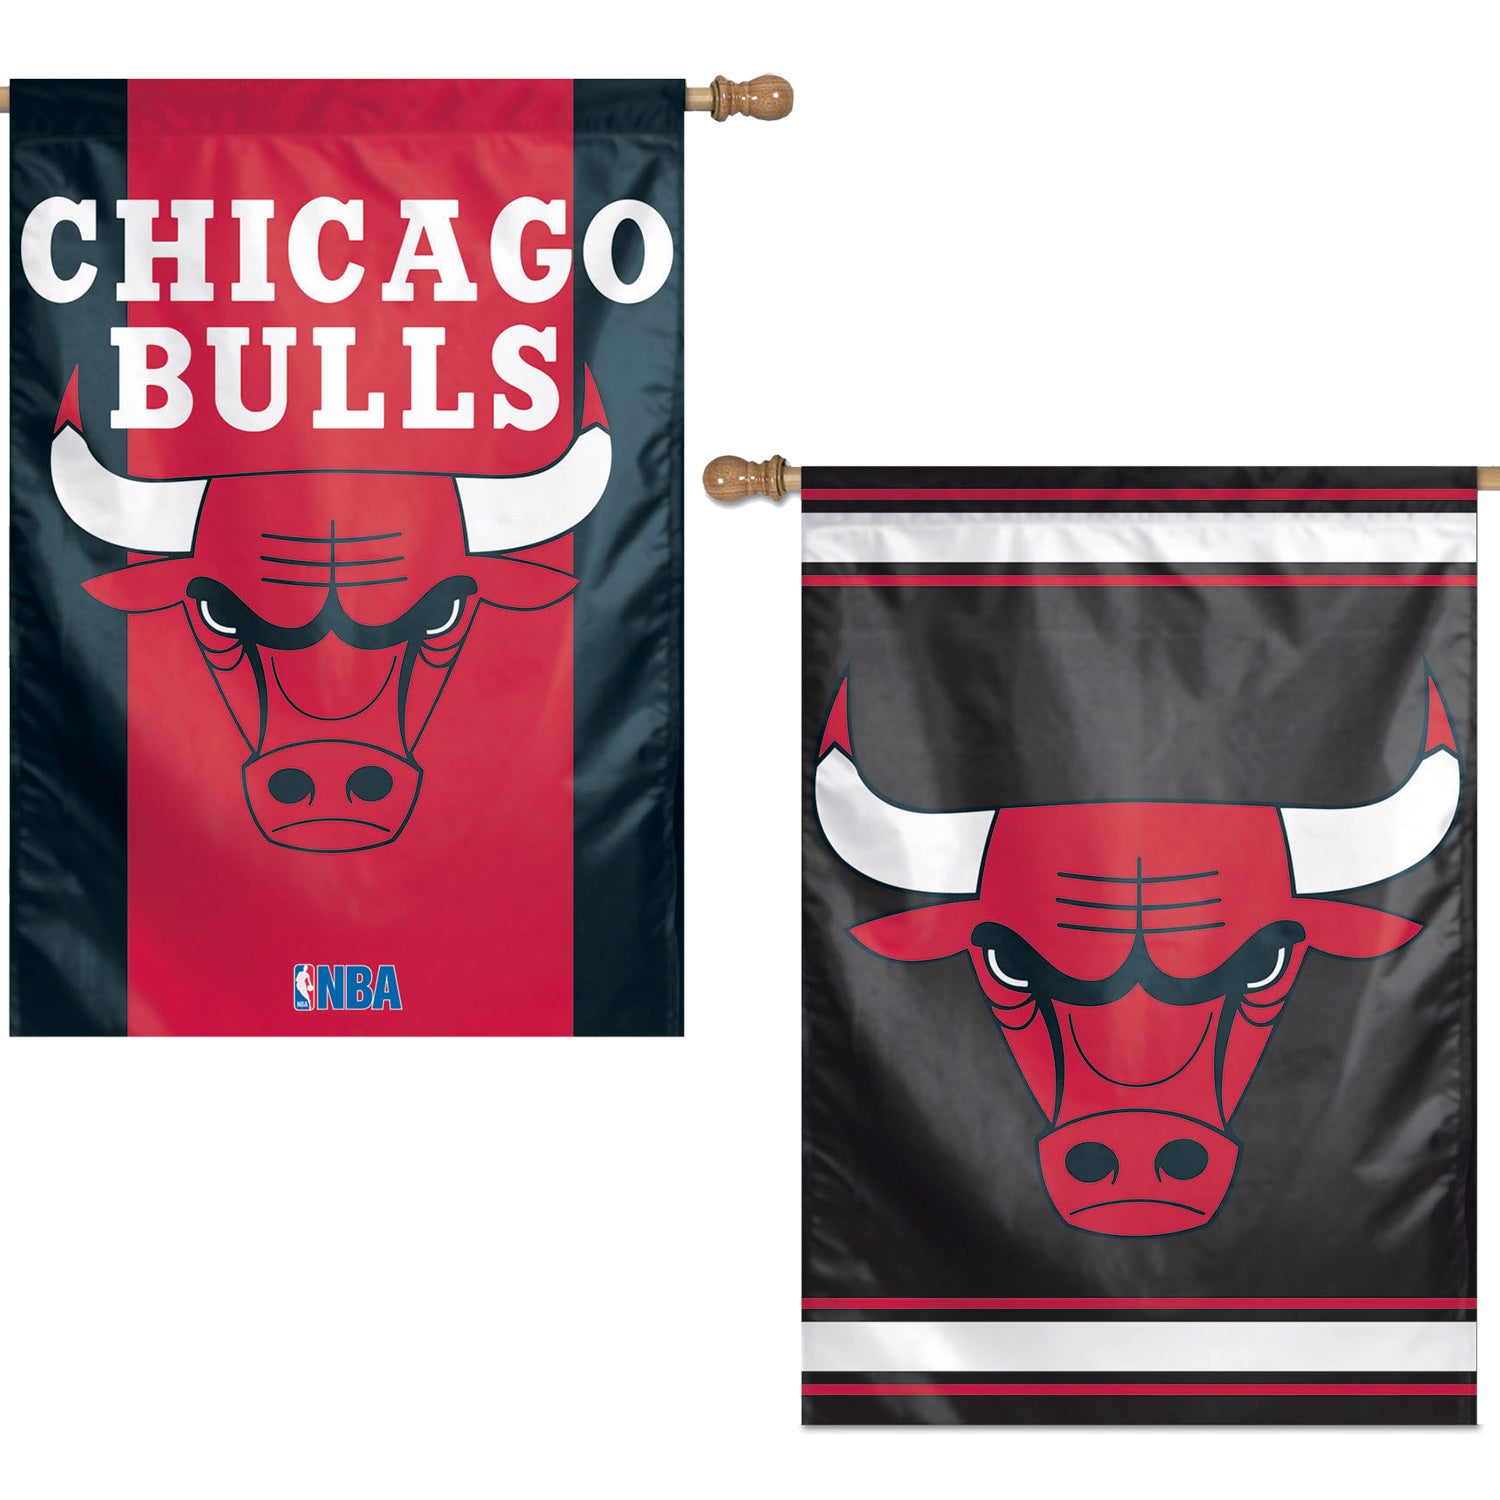 NBA Chicago Bulls - Champions 13 Wall Poster, 22.375 x 34 